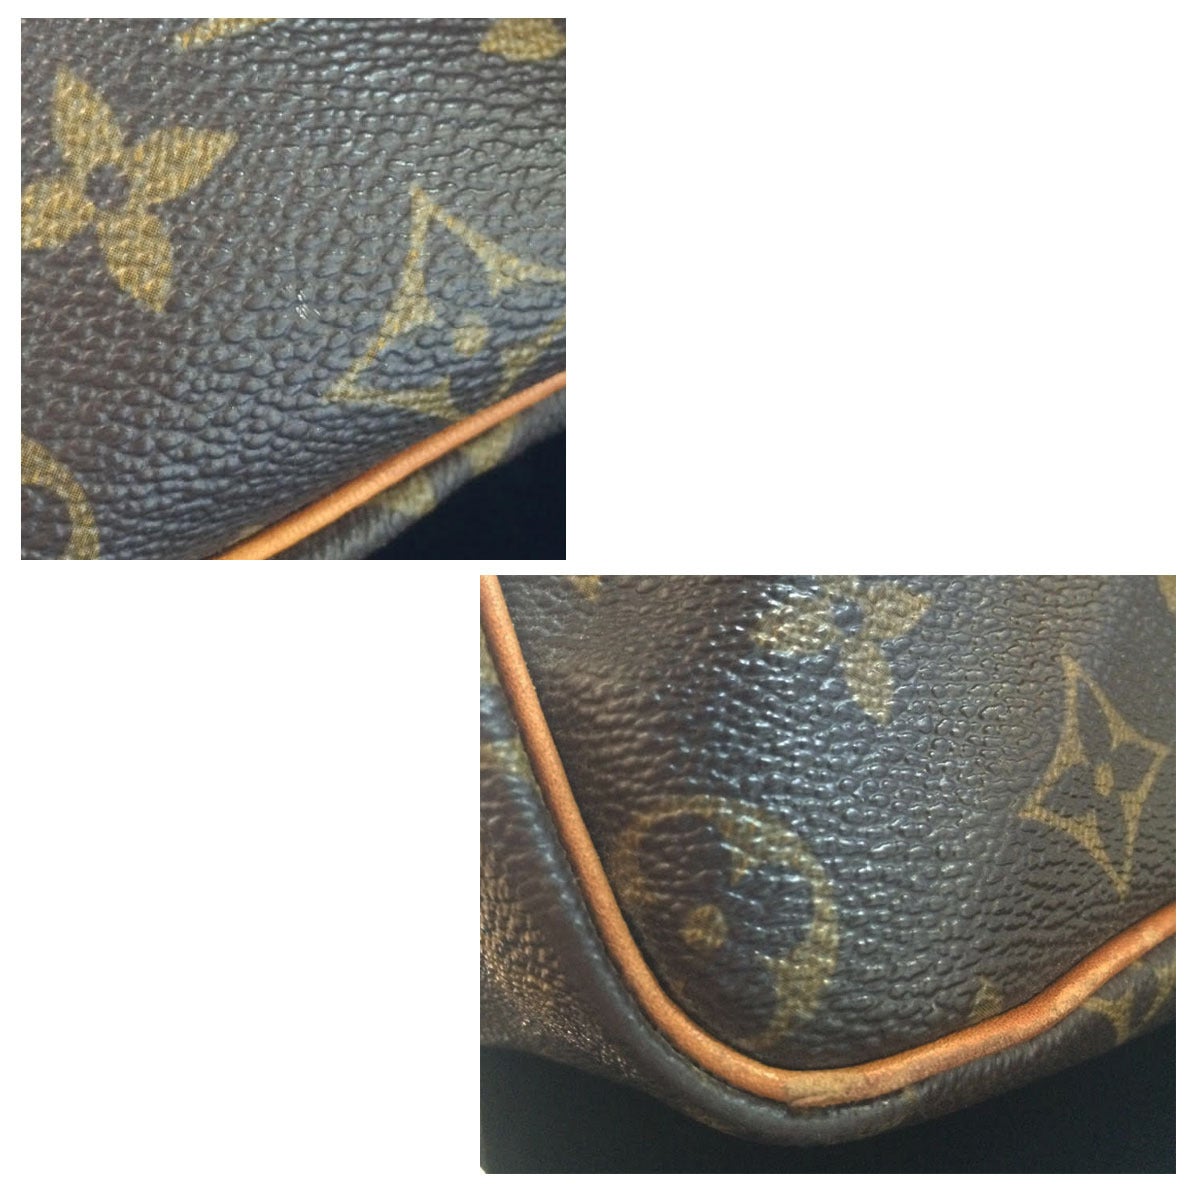 Vintage Louis Vuitton USA French Co. TALON Speedy 30 LV Hand Bag - Nina  Furfur Vintage Boutique